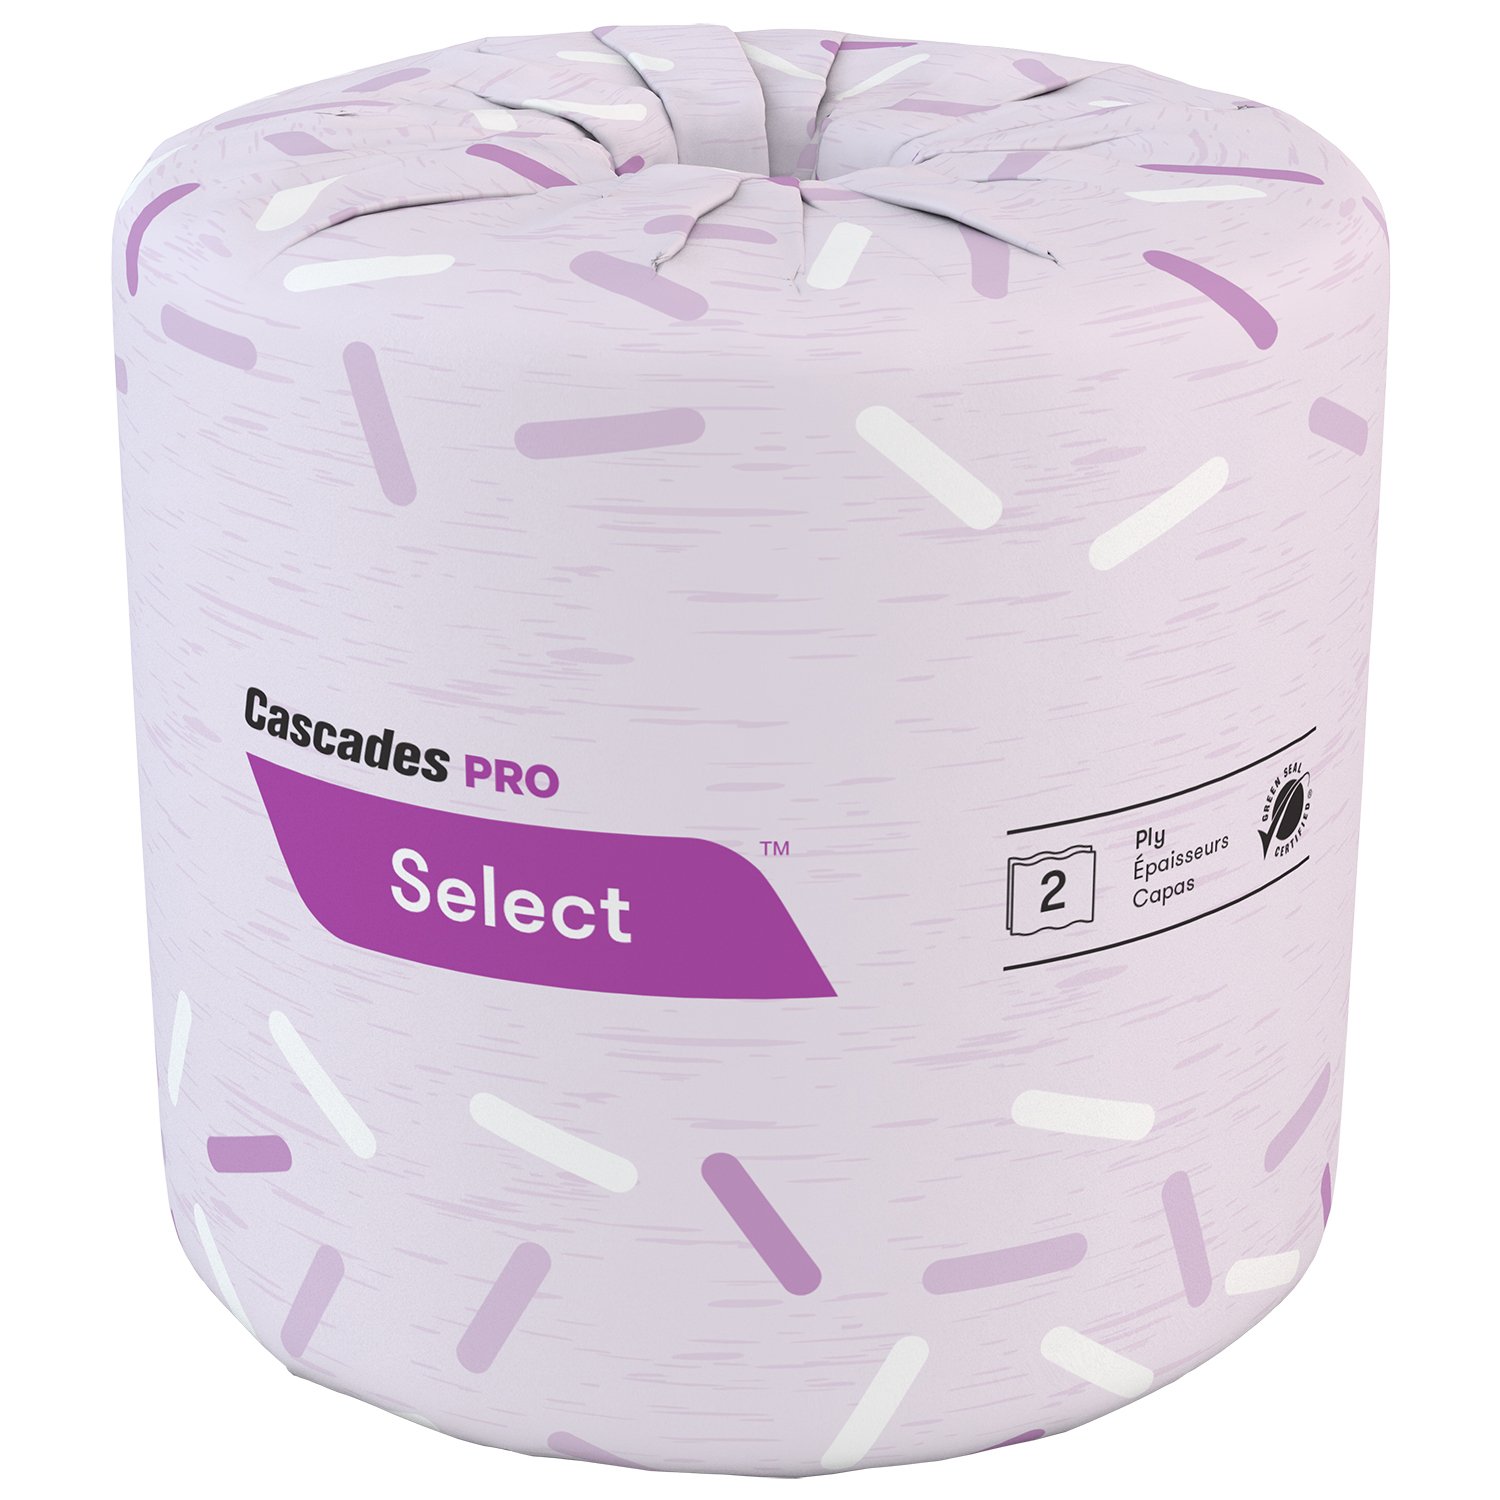 Cascades, Cascades PRO Select 2-Ply Standard Bathroom Tissue Rolls - 48 Rolls, 48 CT